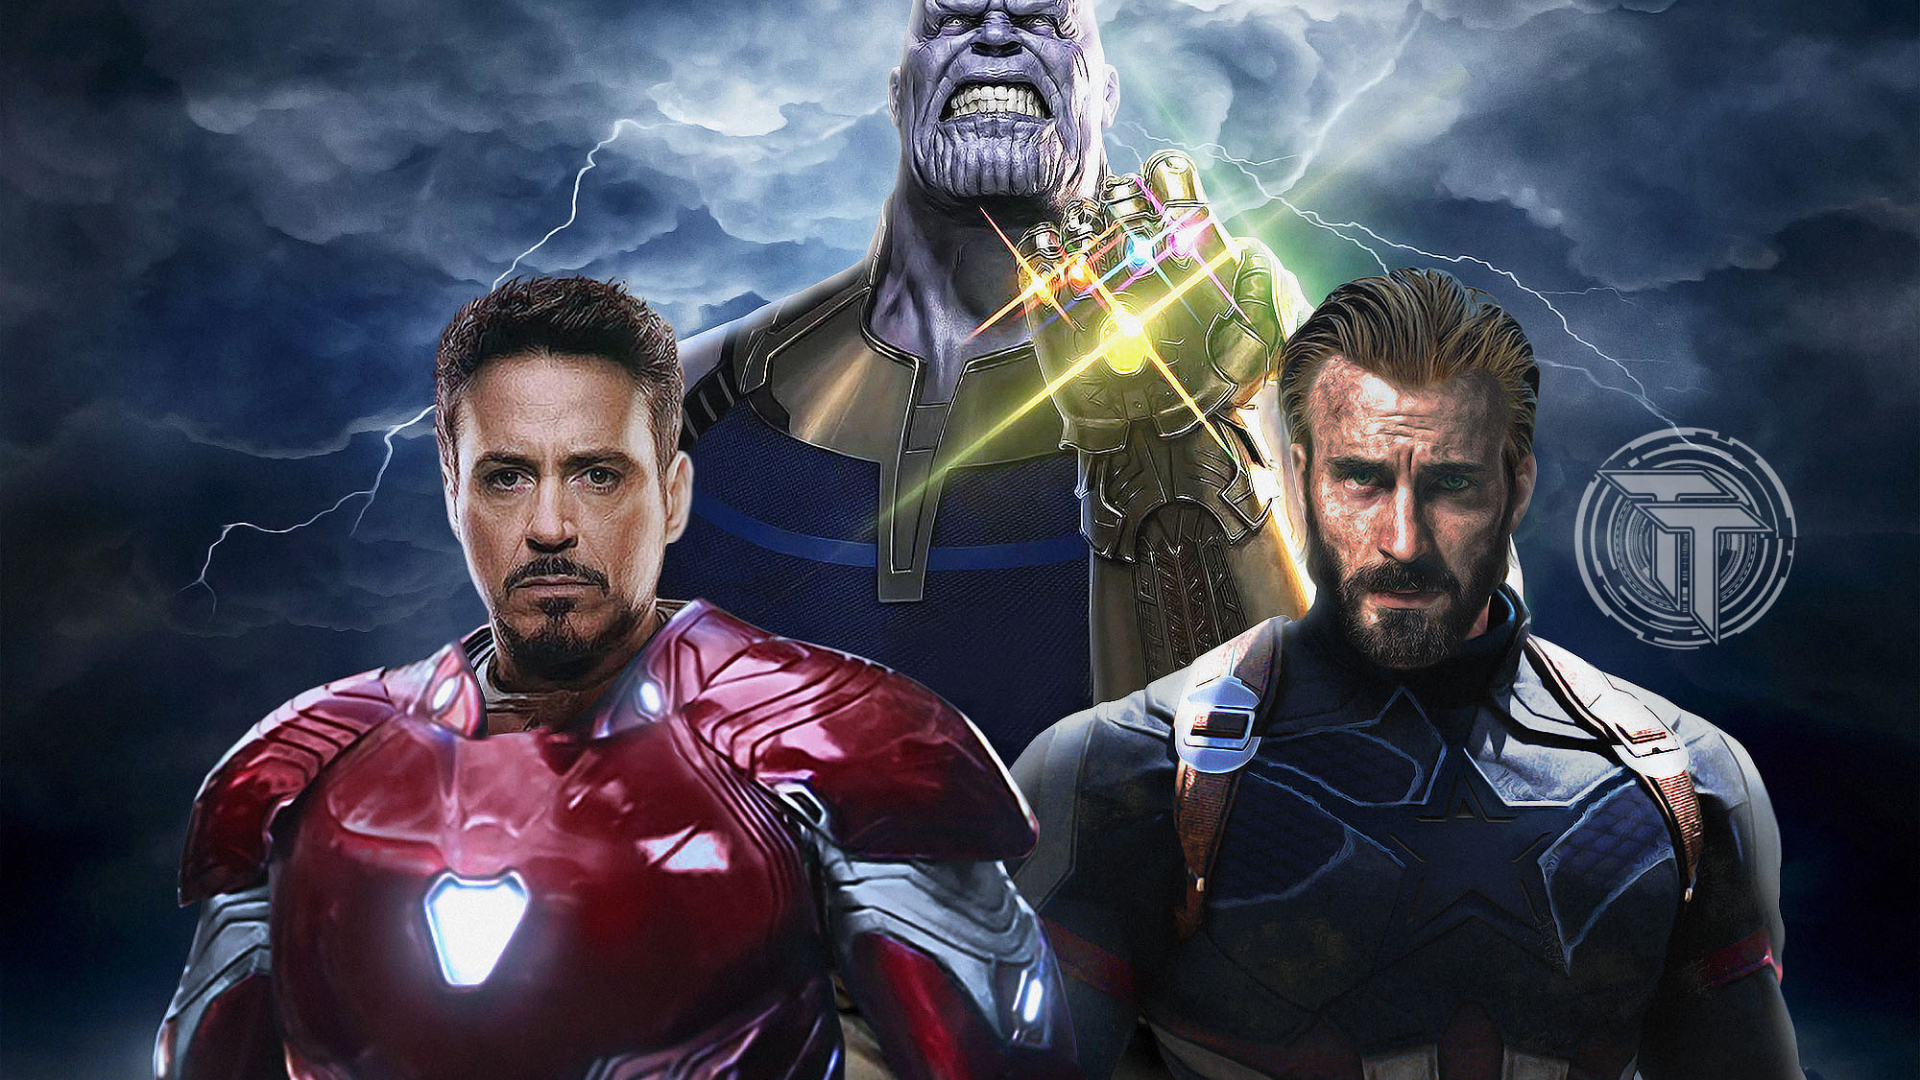 Desktop Wallpaper Avengers Infinity War Captain America Iron Man Thanos Hd Image Picture Background c877